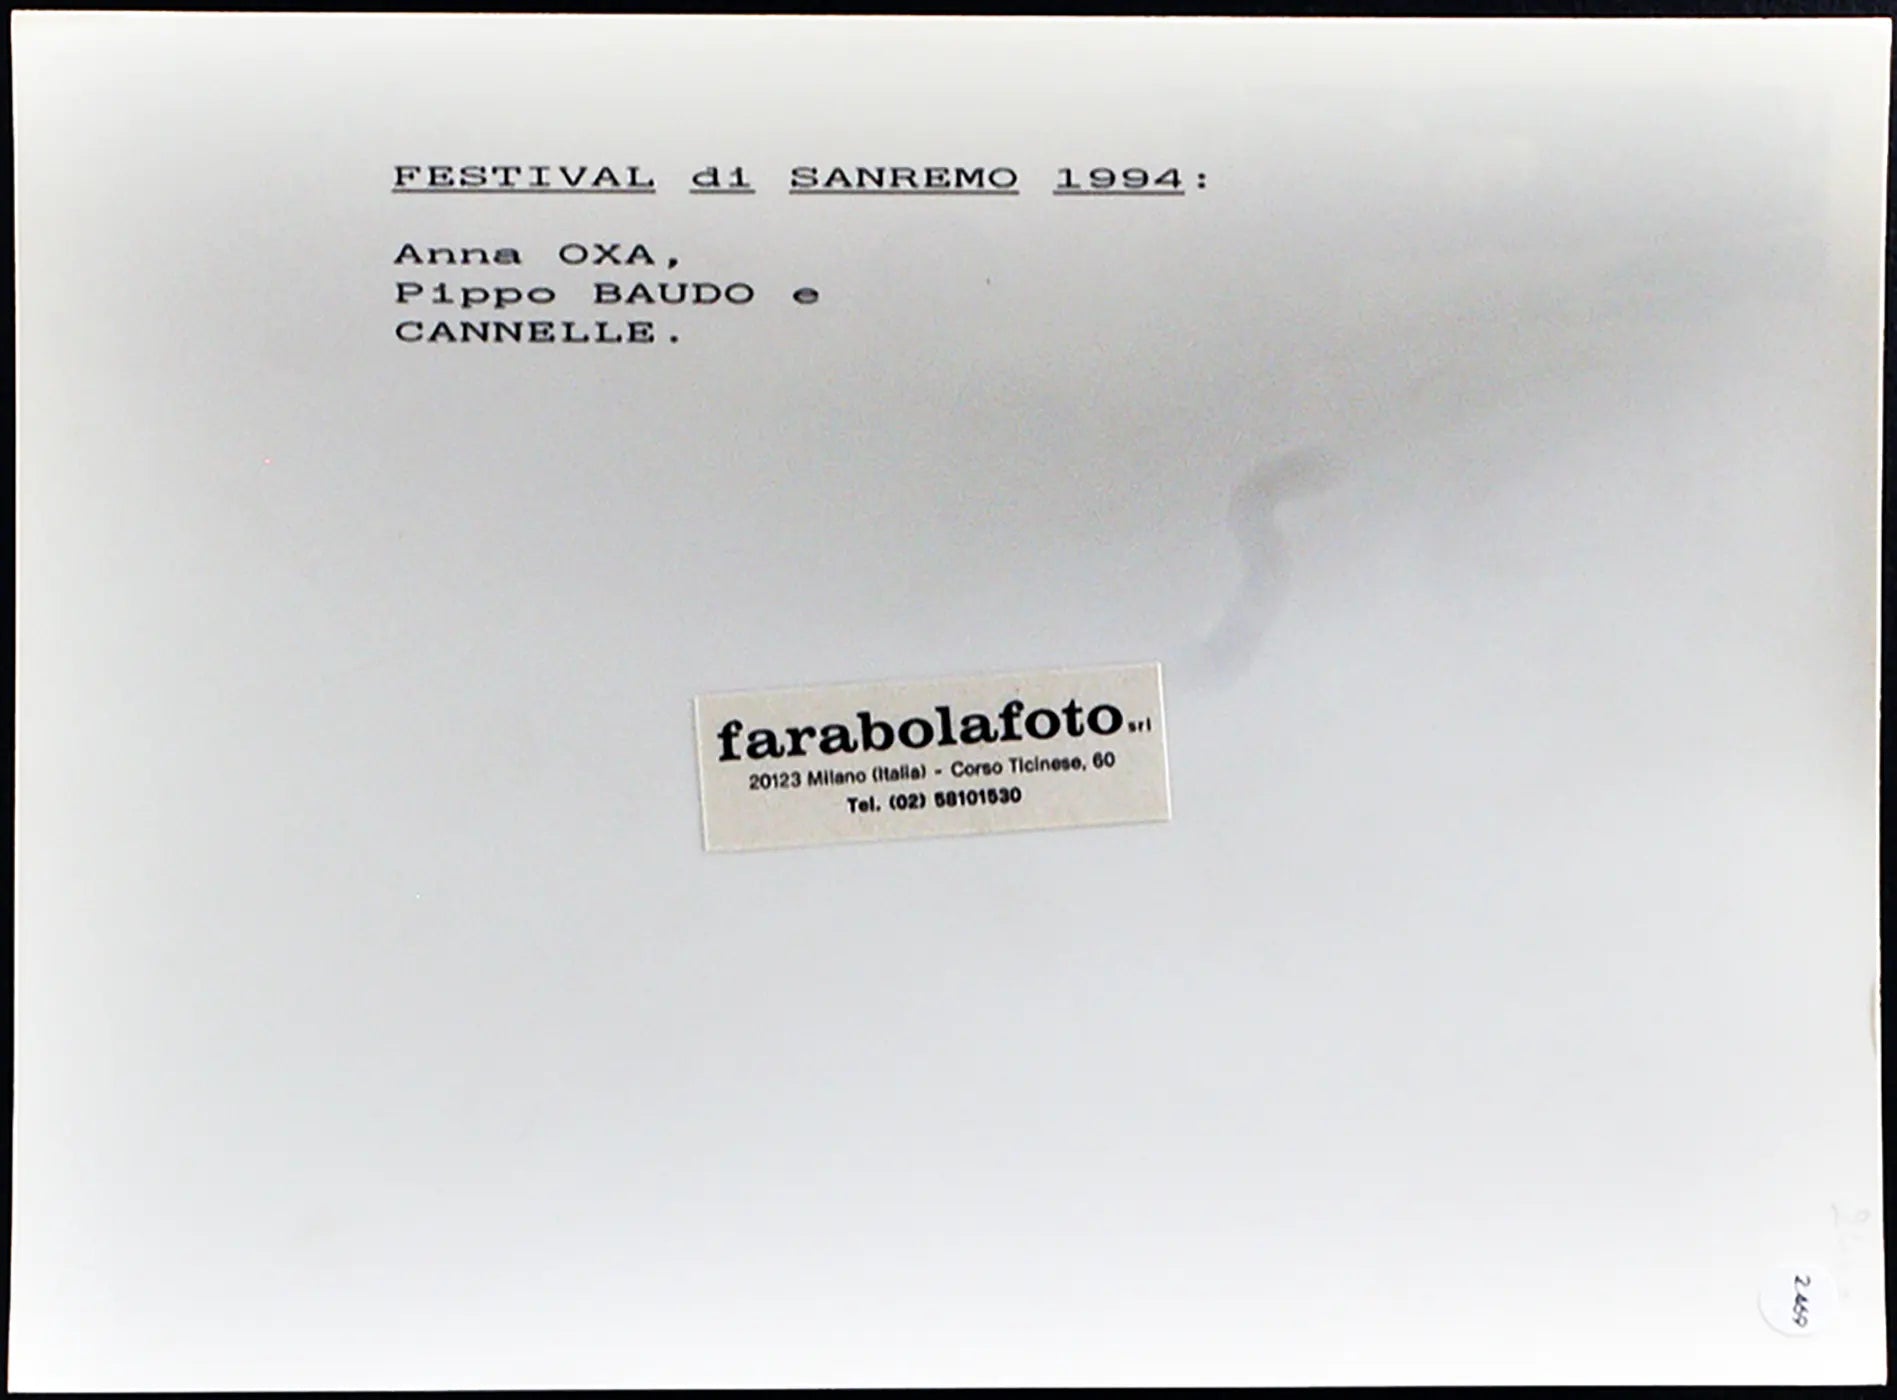 Sanremo 1994 Anna Oxa, Baudo e Cannelle Ft 2469 - Stampa 24x18 cm - Farabola Stampa ai sali d'argento